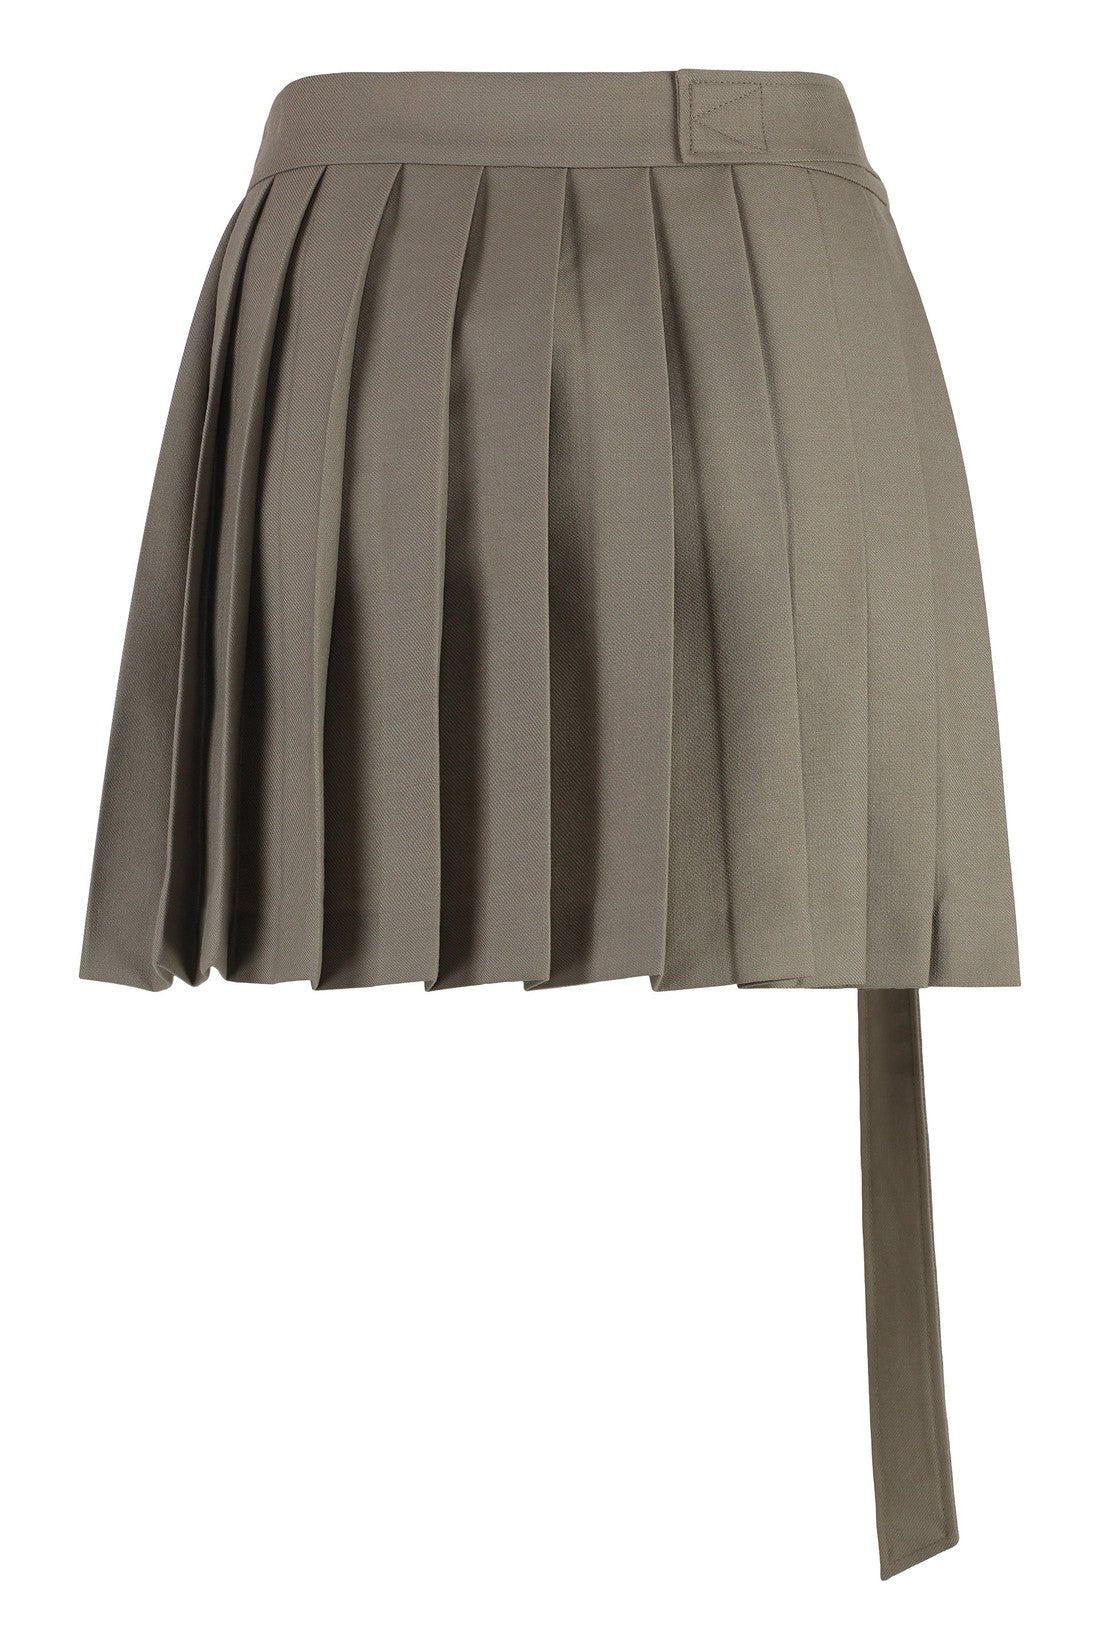 Pleated-skirt-AMI-PARIS-designer-outlet-archivist-2_33365c73-6b82-4de4-993b-4f4fa2093b7e.jpg